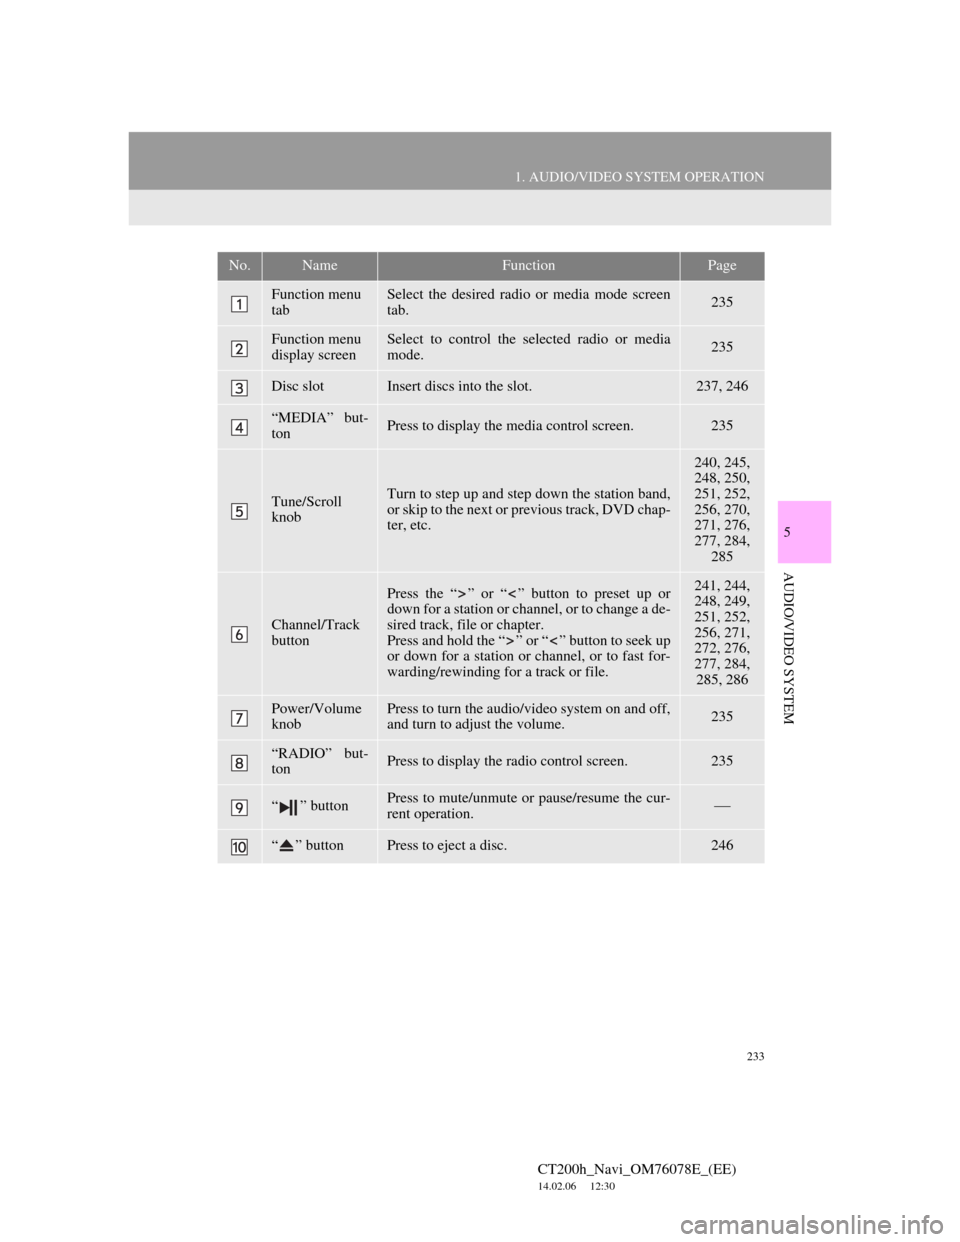 Lexus CT200h 2012  Navigation Manual (in English) 233
1. AUDIO/VIDEO SYSTEM OPERATION
5
AUDIO/VIDEO SYSTEM
CT200h_Navi_OM76078E_(EE)
14.02.06     12:30
No.NameFunctionPage
Function menu 
tabSelect the desired radio or media mode screen
tab.235
Functi